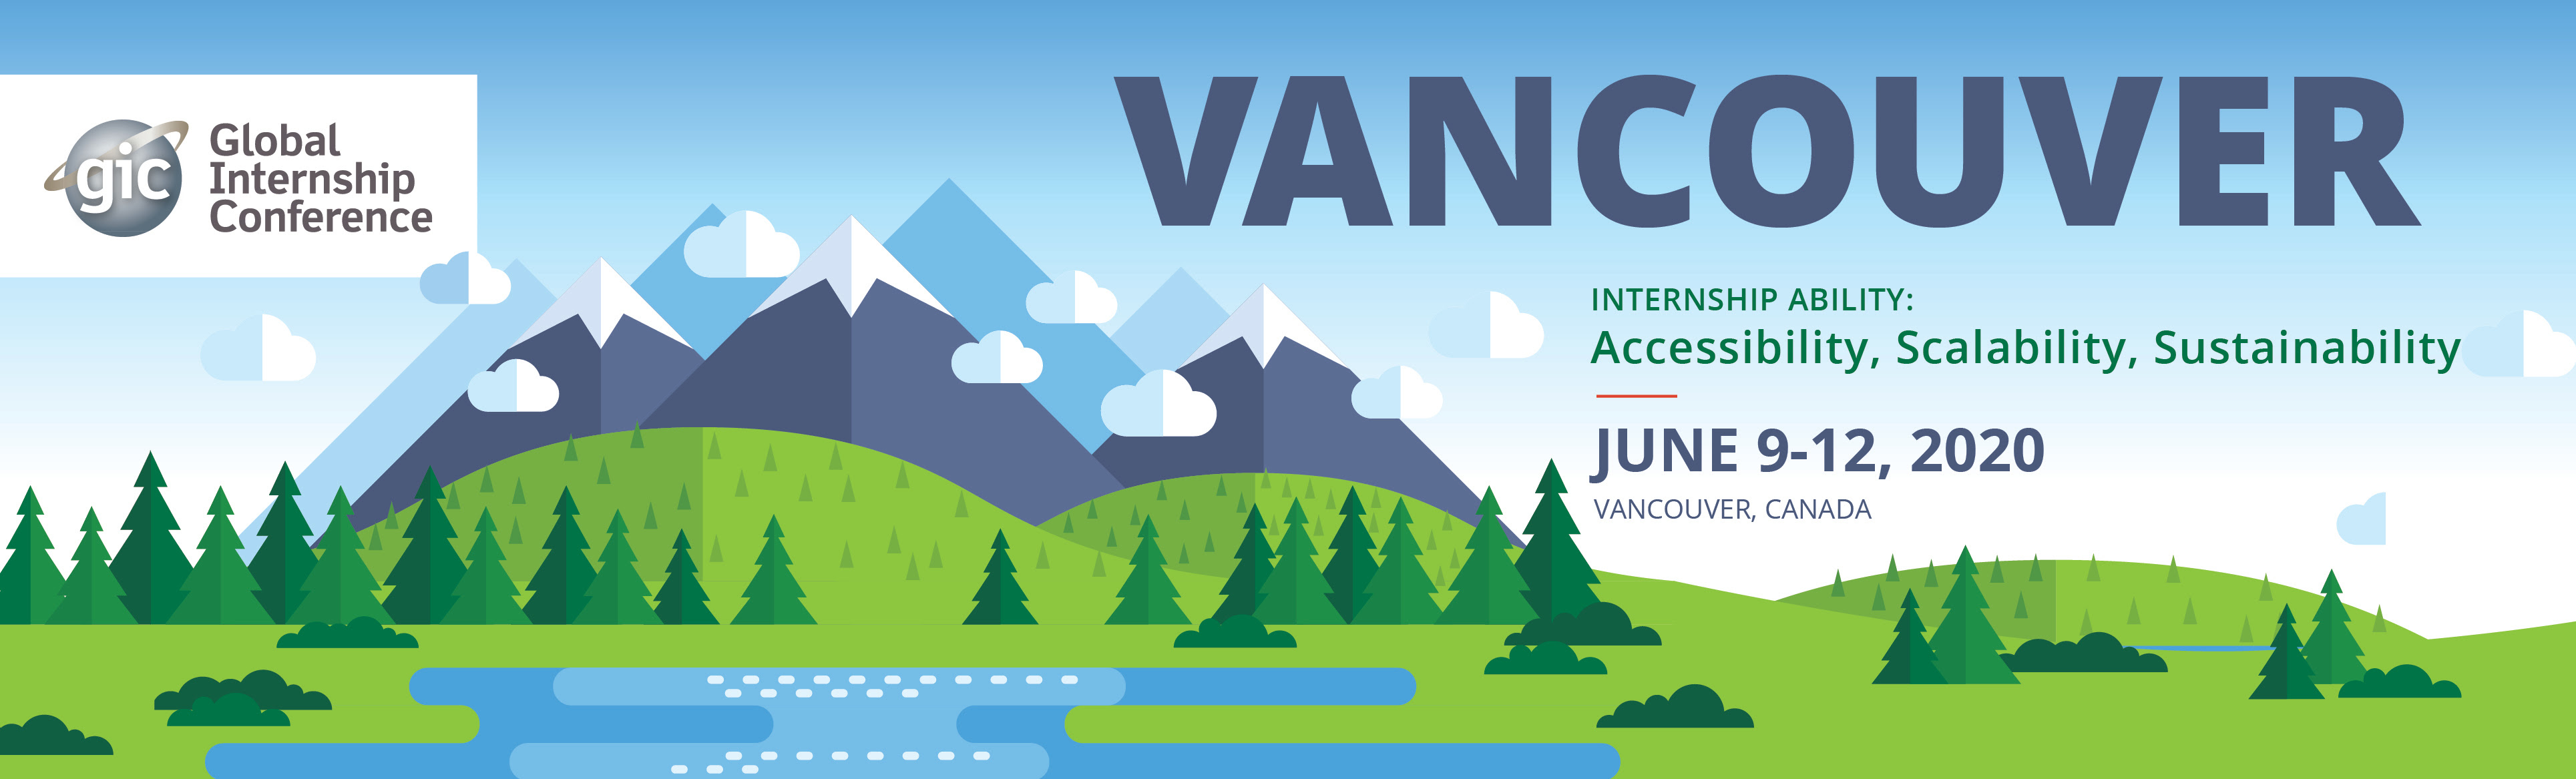 GIC 12 - 2020_Vancouver_banner_280x926